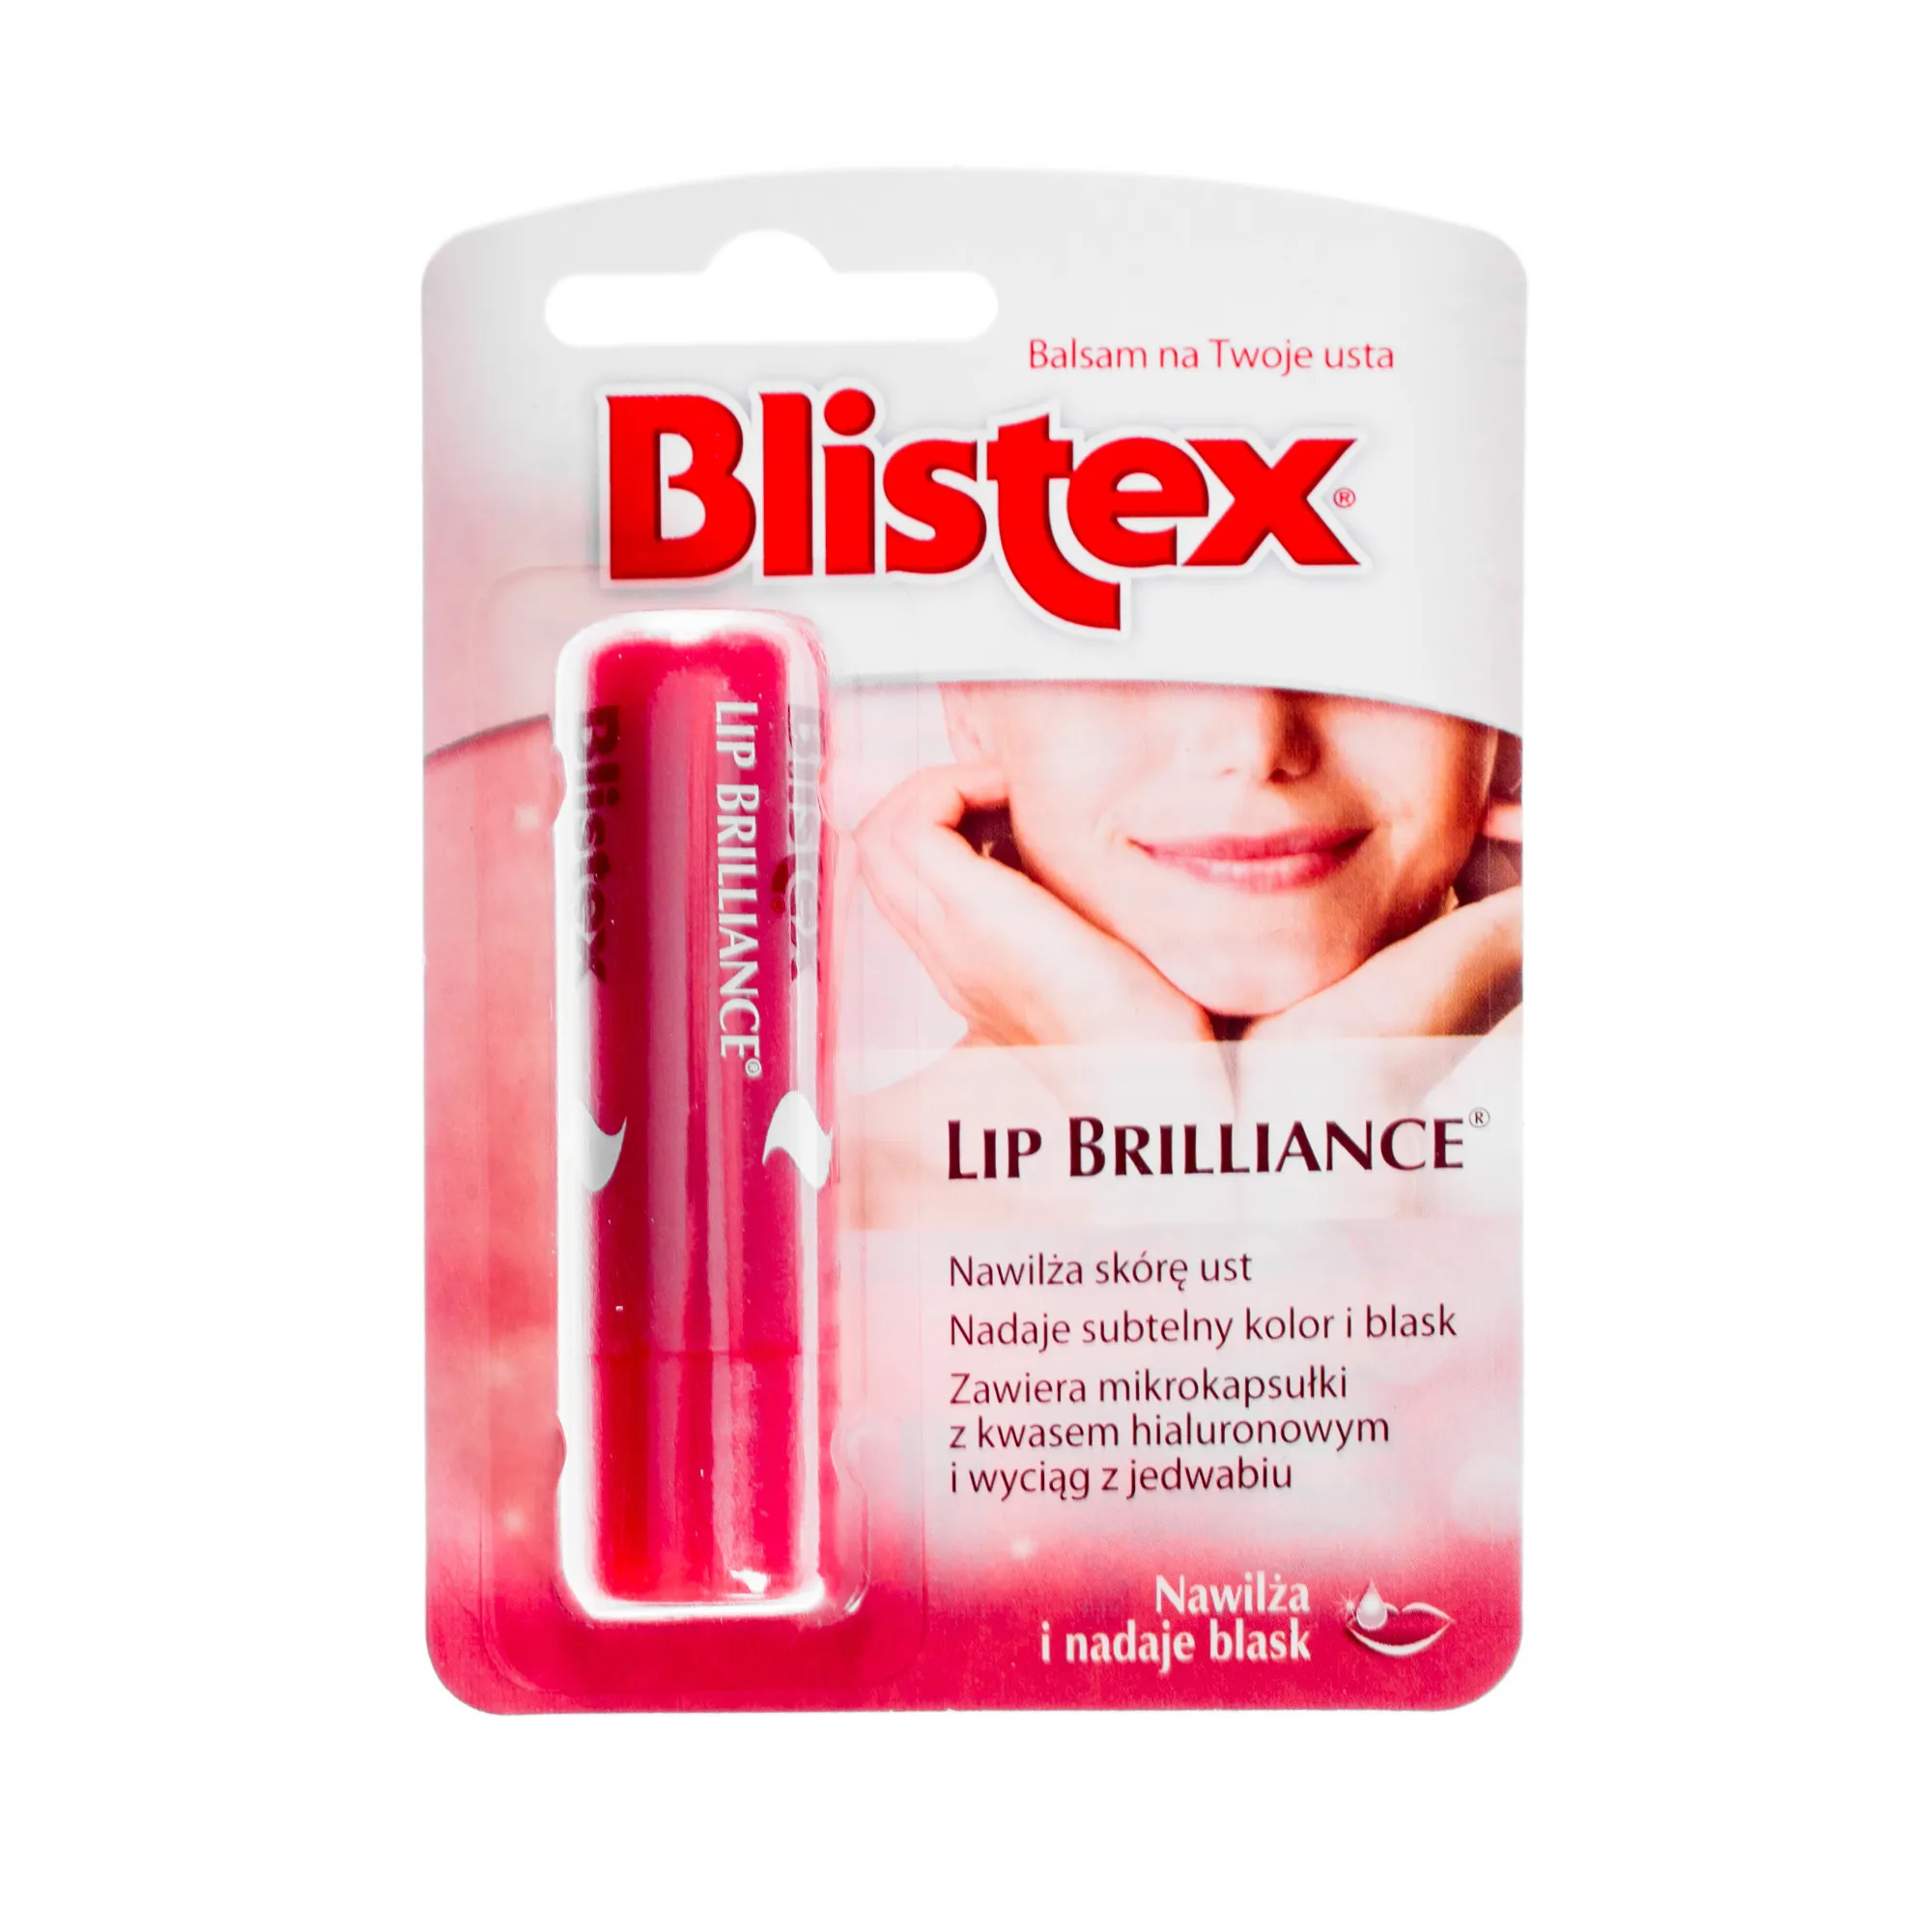 Blistex Lip Brilliance, balsam do ust, 3,7 g